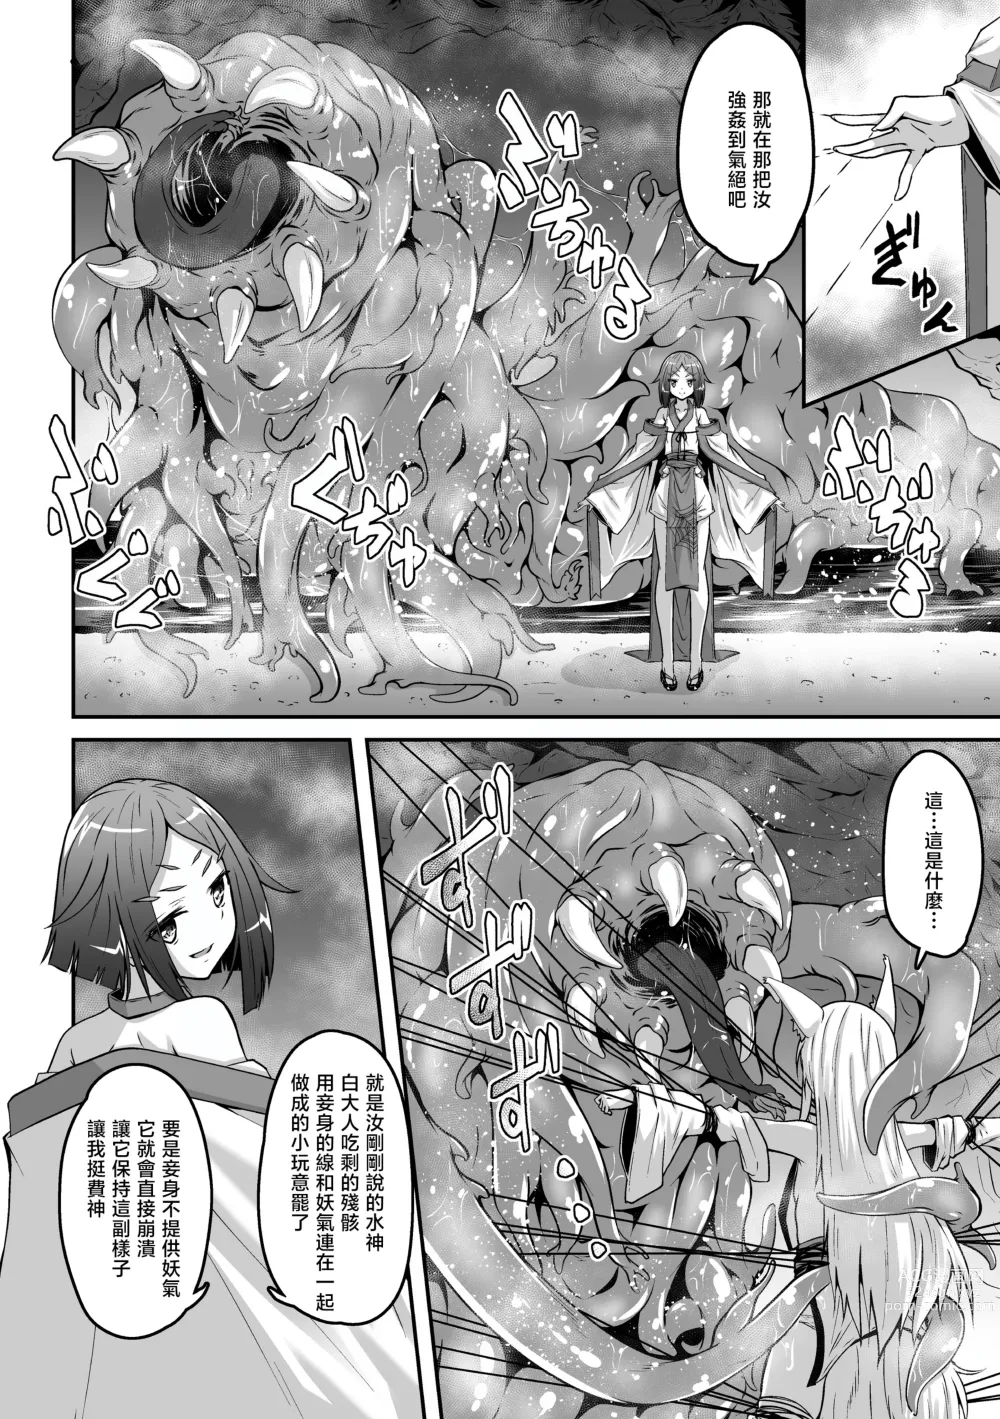 Page 11 of manga Youko Inmon Kitan 5